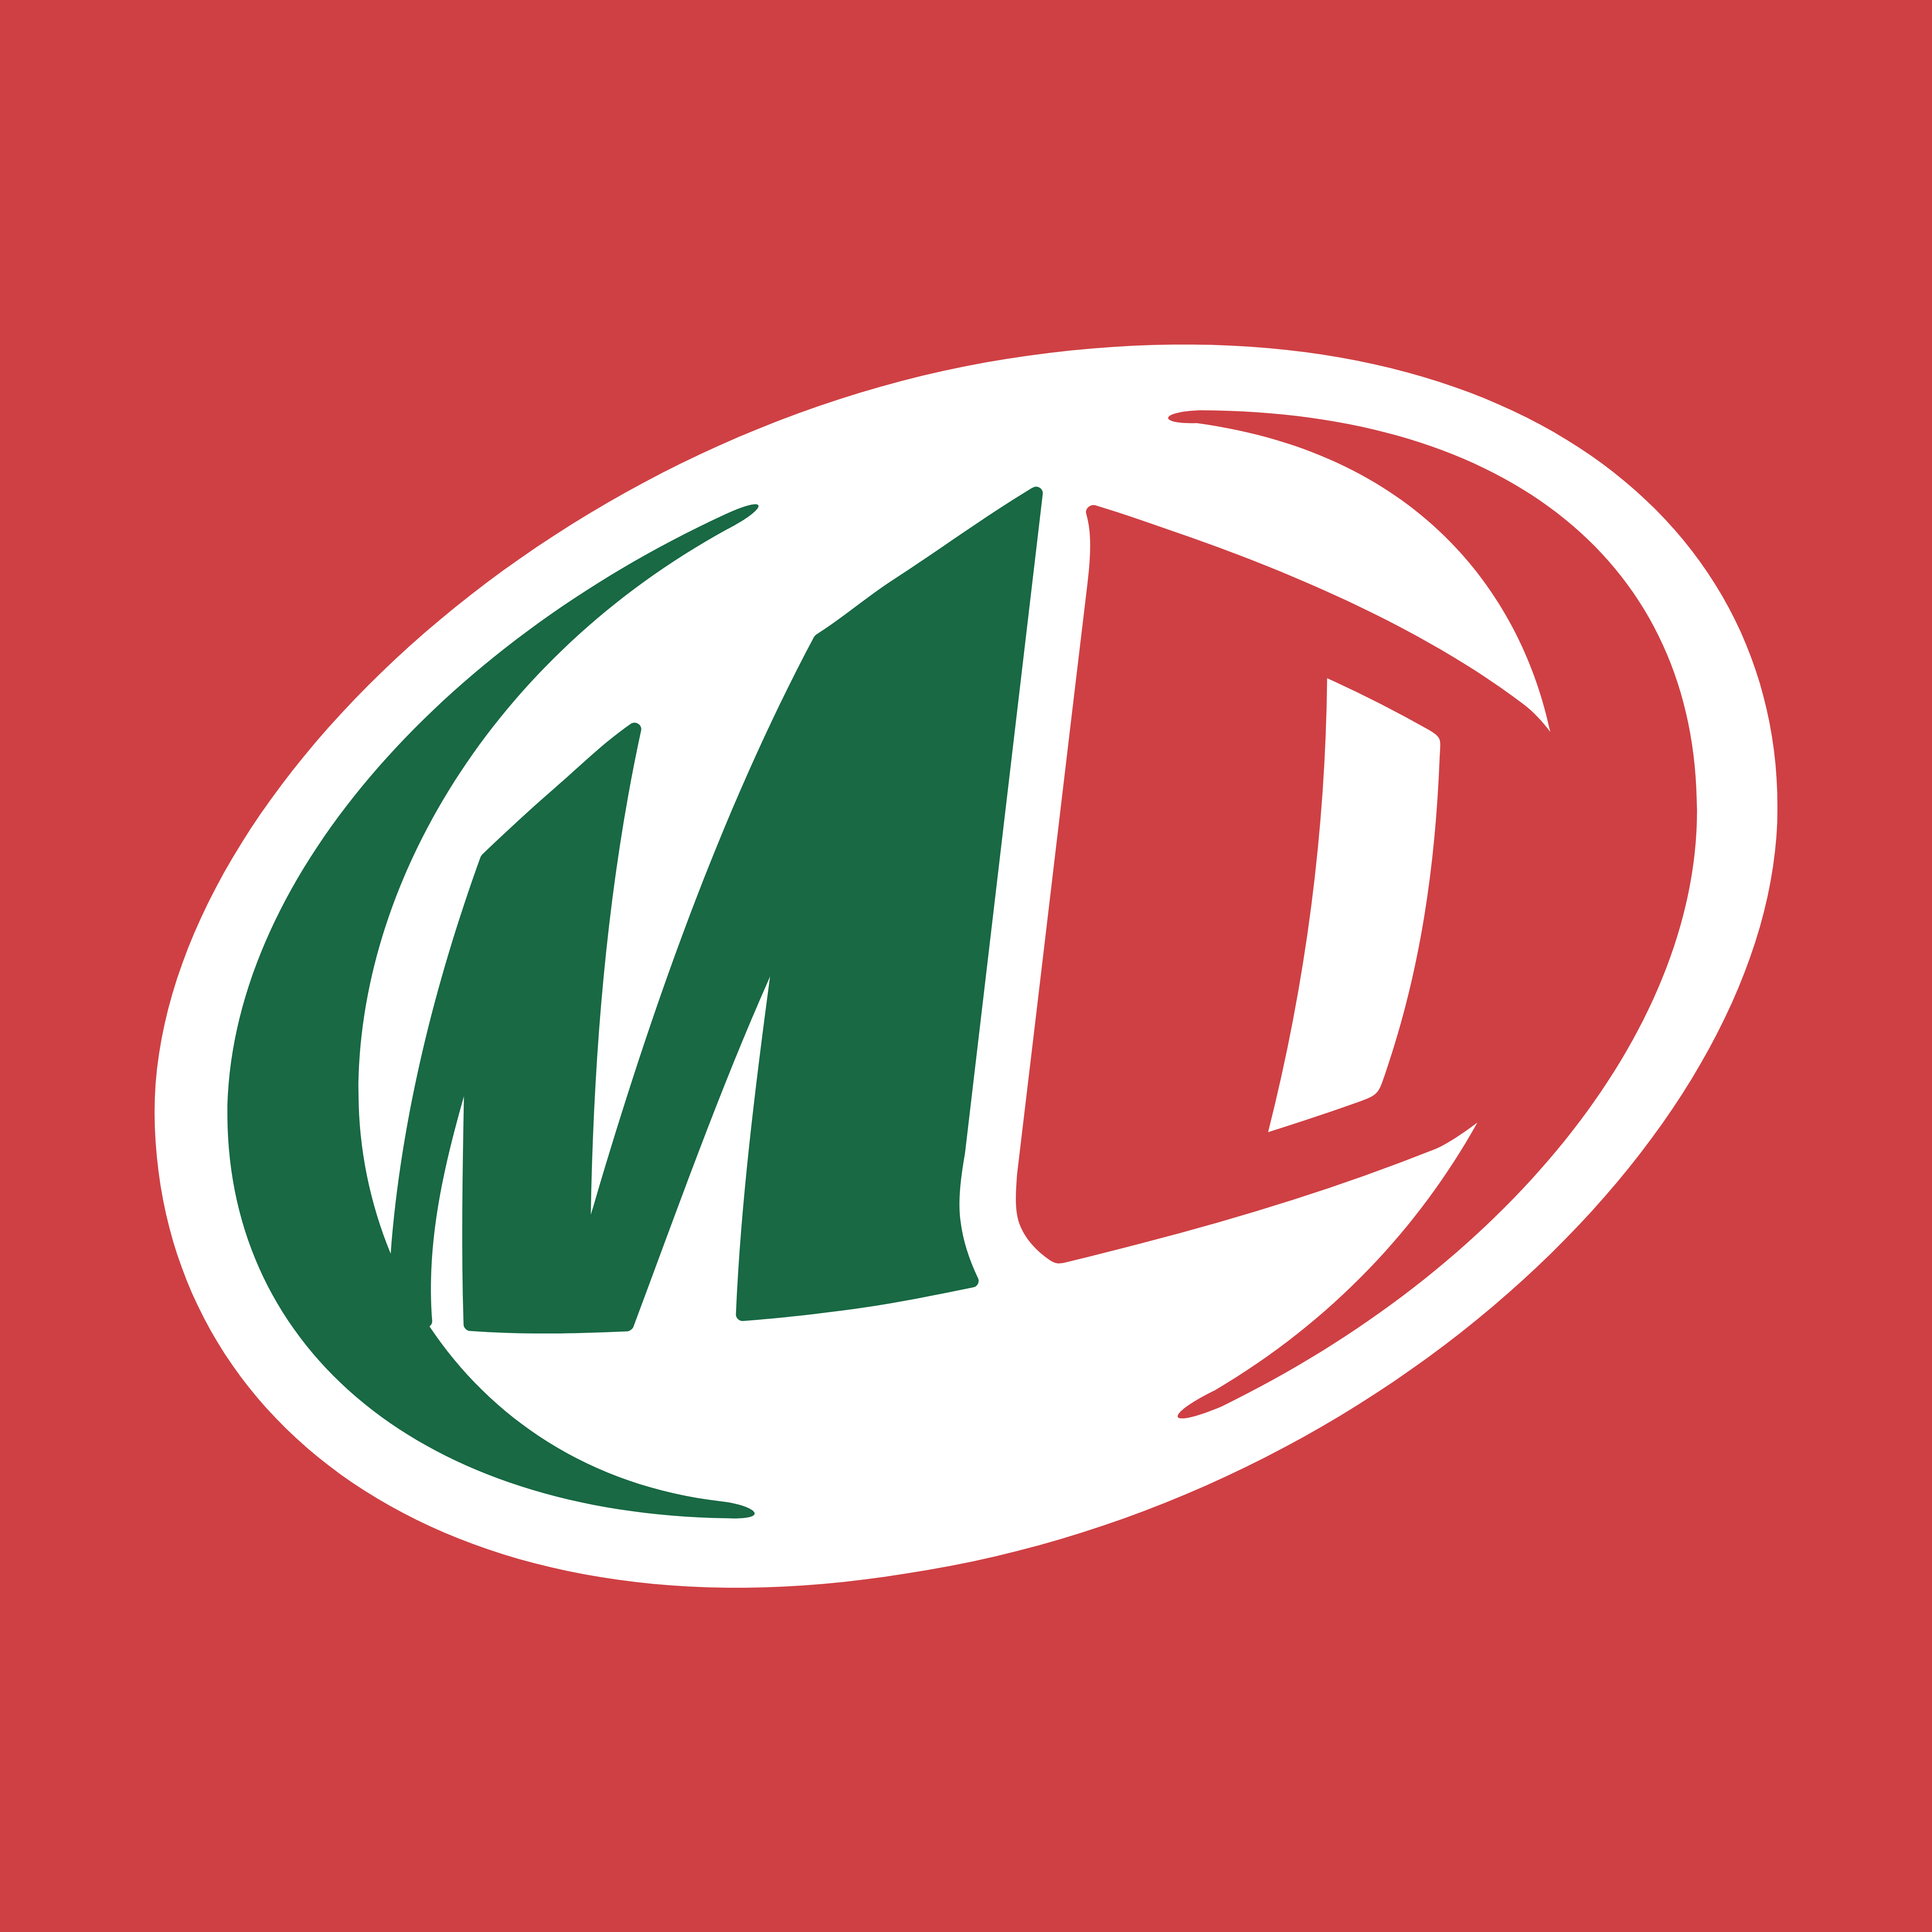 Mountain Dew logo red, SVG.